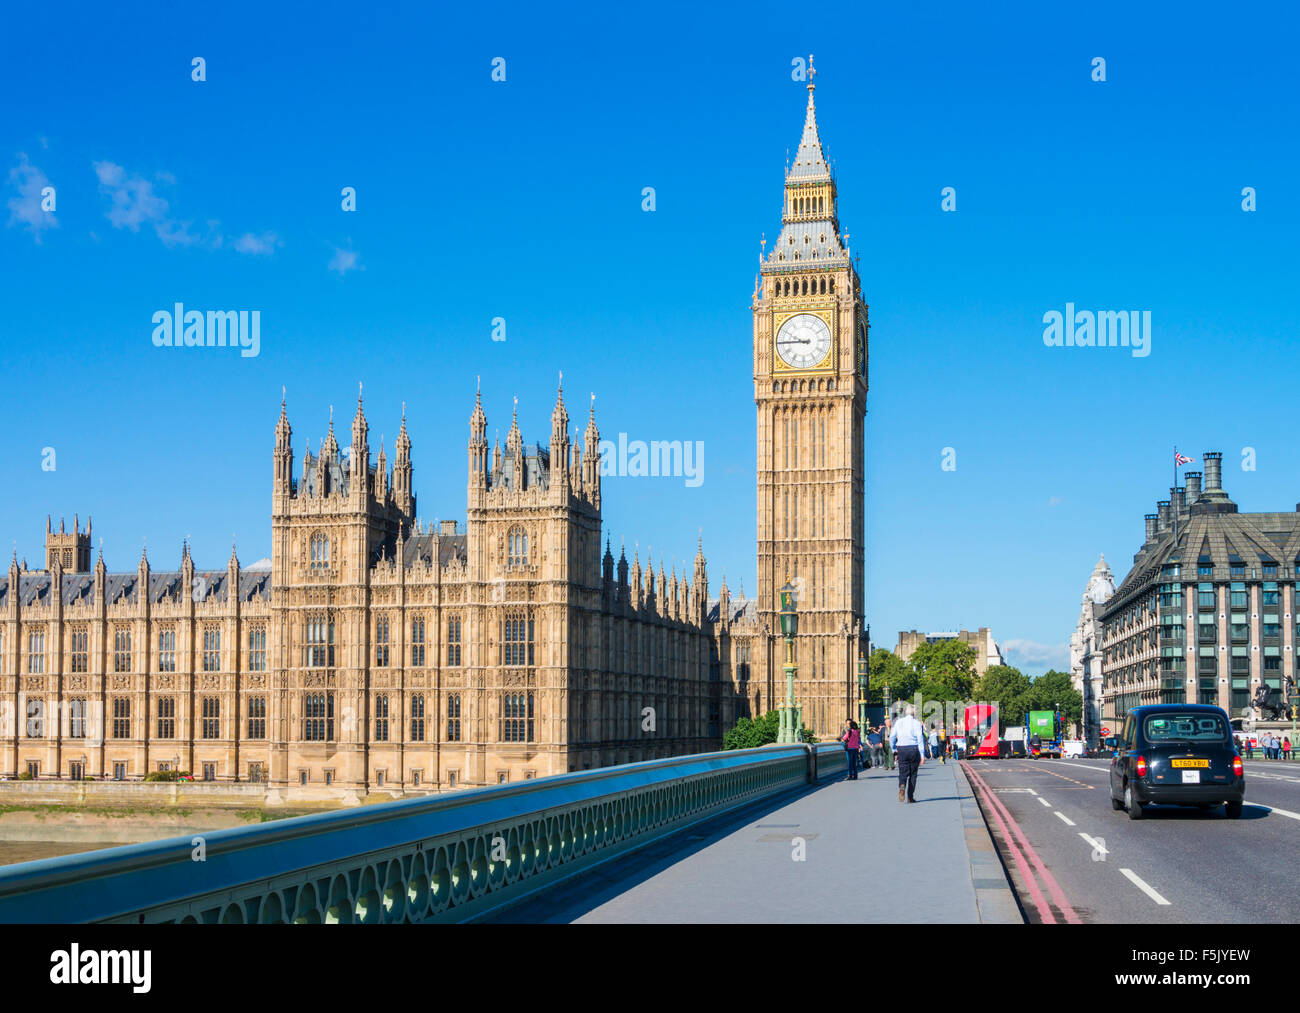 Schwarzes Taxi Taxi fahren auf Westminster Bridge mit Houses Of Parliament und Big Ben hinter Stadt London England UK GB EU Europas Stockfoto